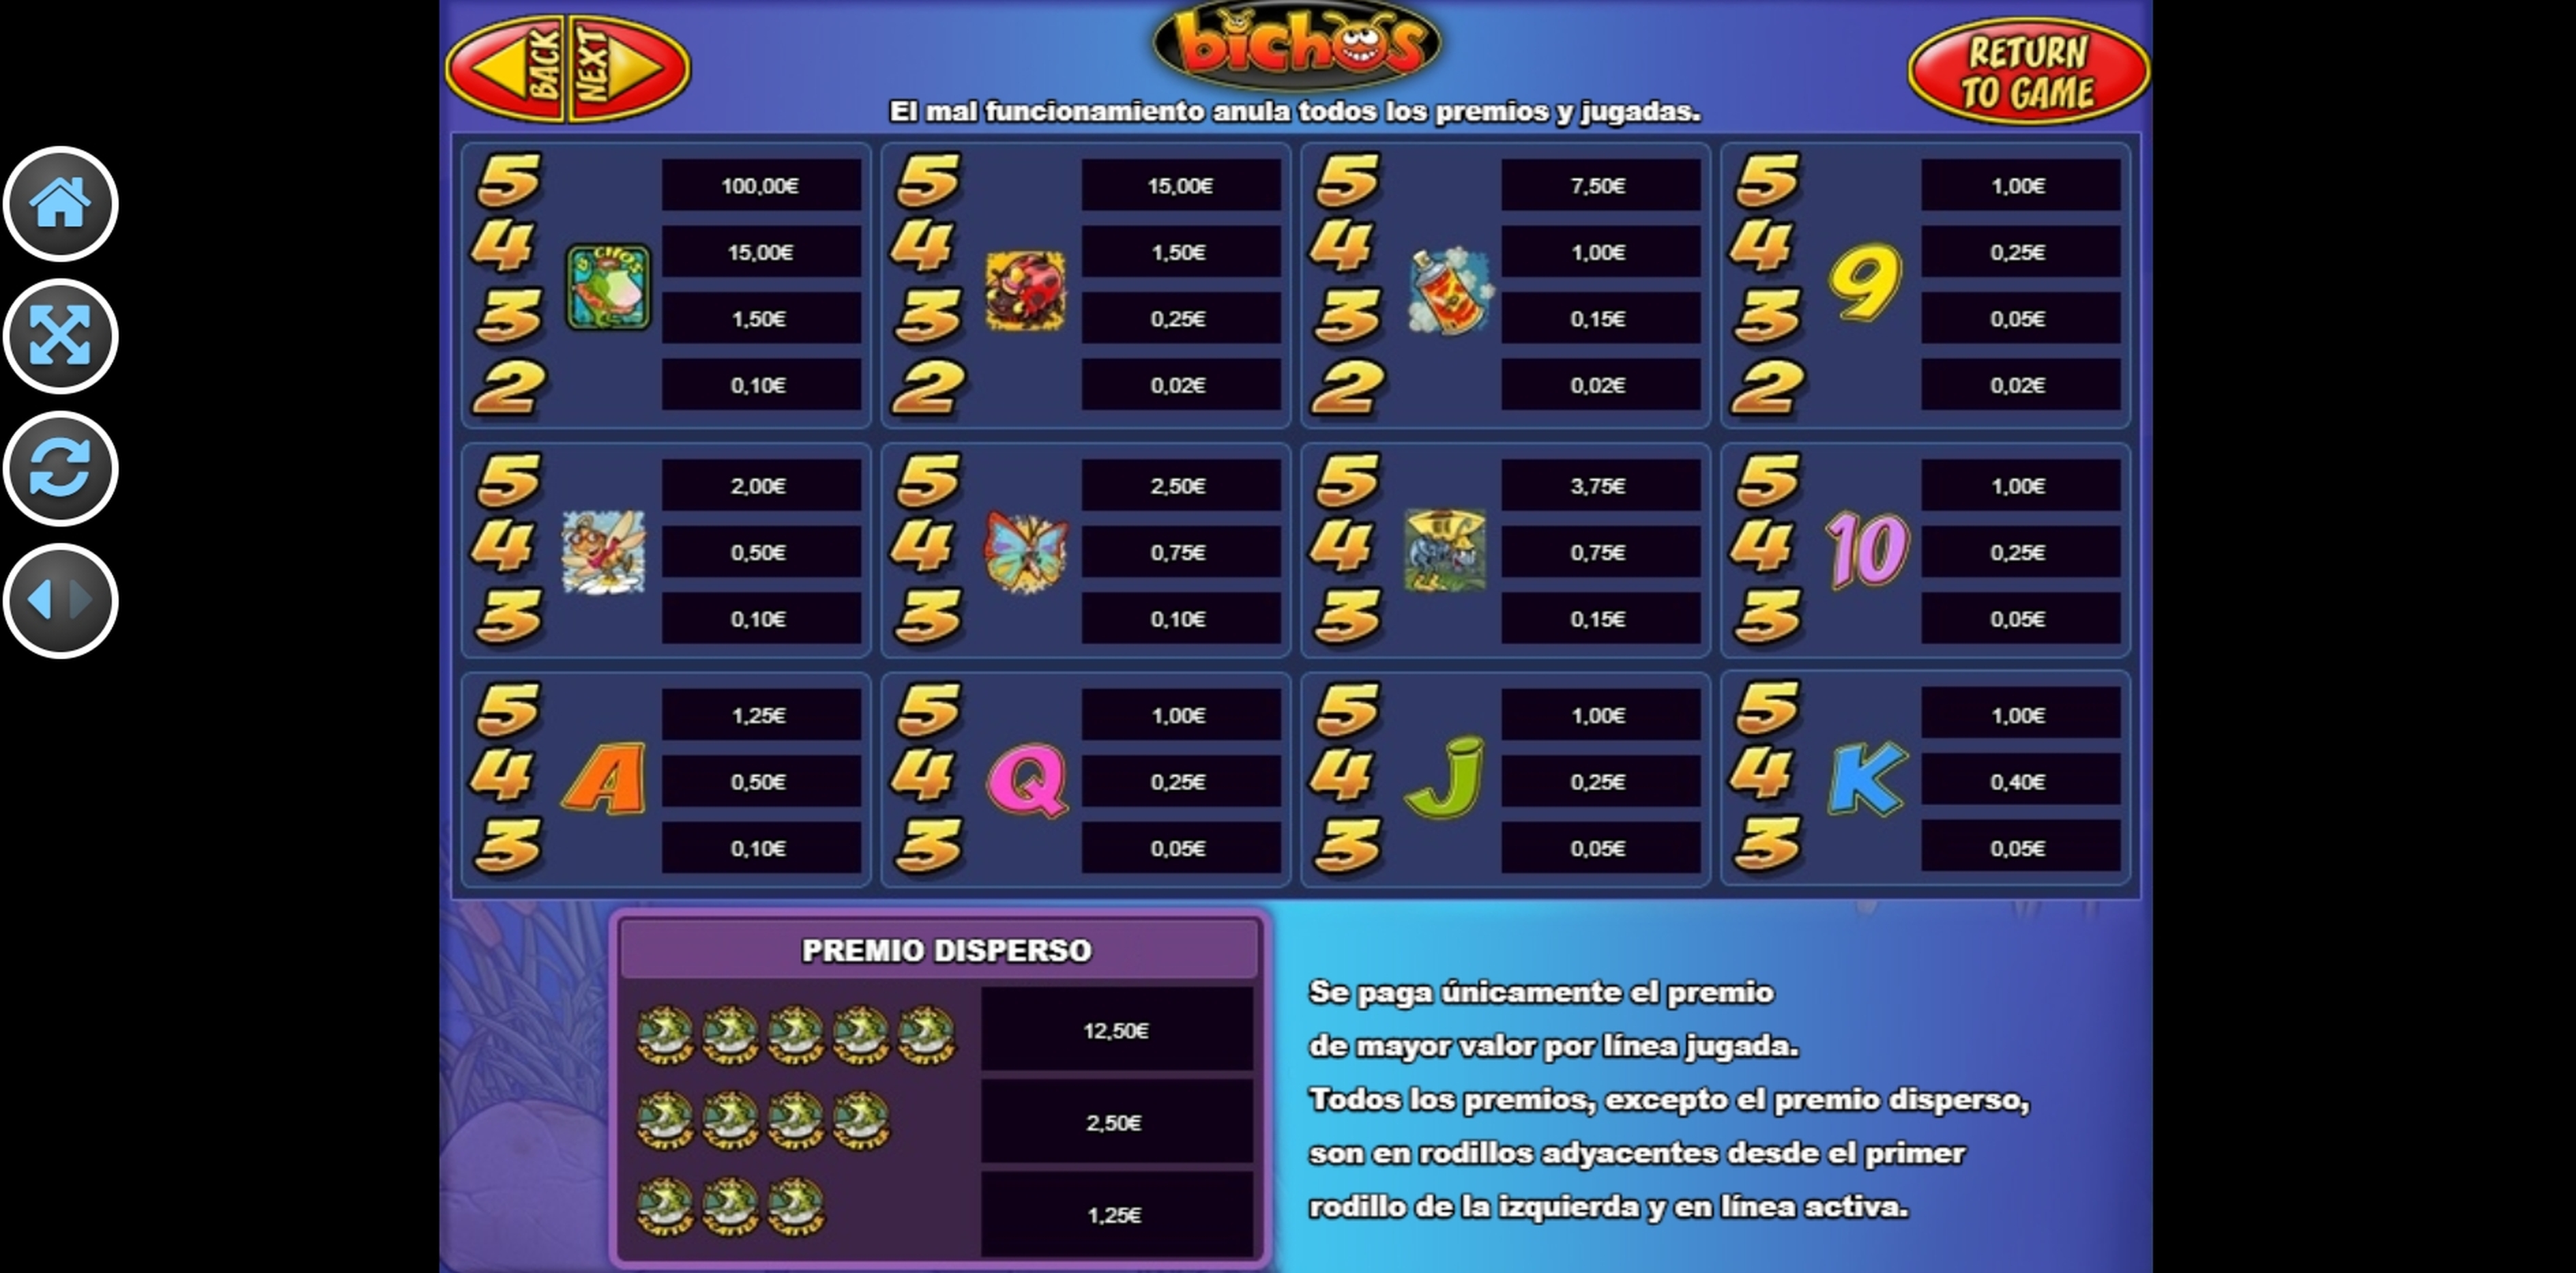 Info of Bichos Slot Game by R. Franco